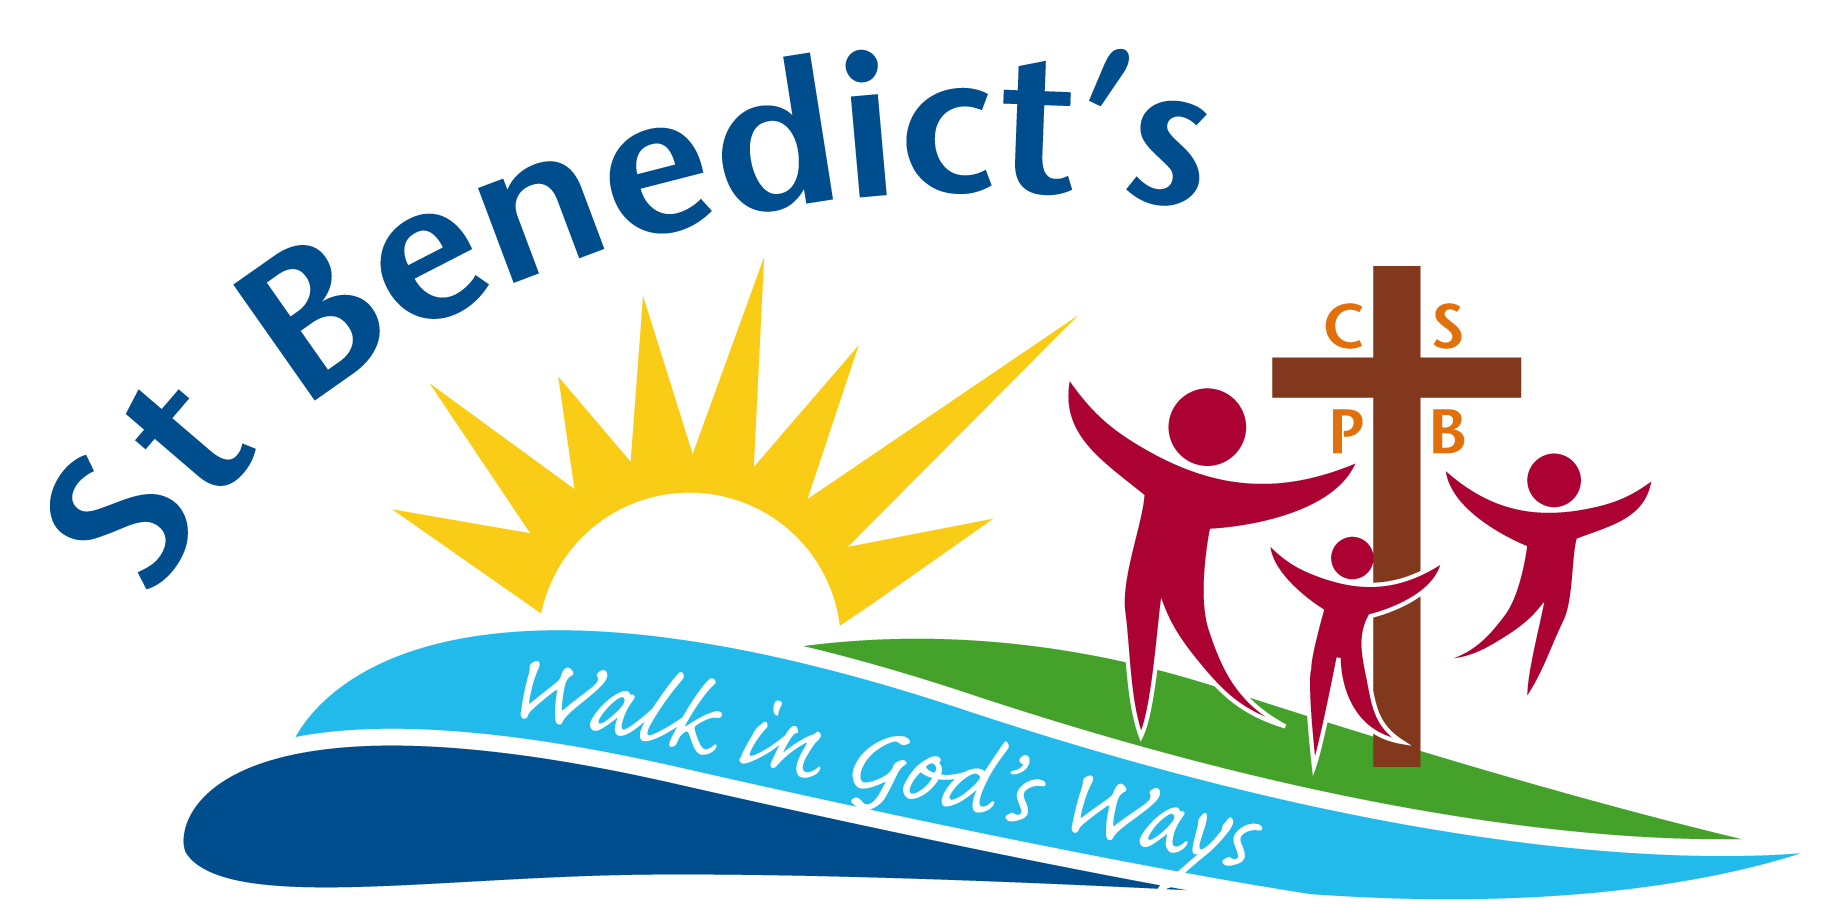 St Benedicts logo clr.jpg